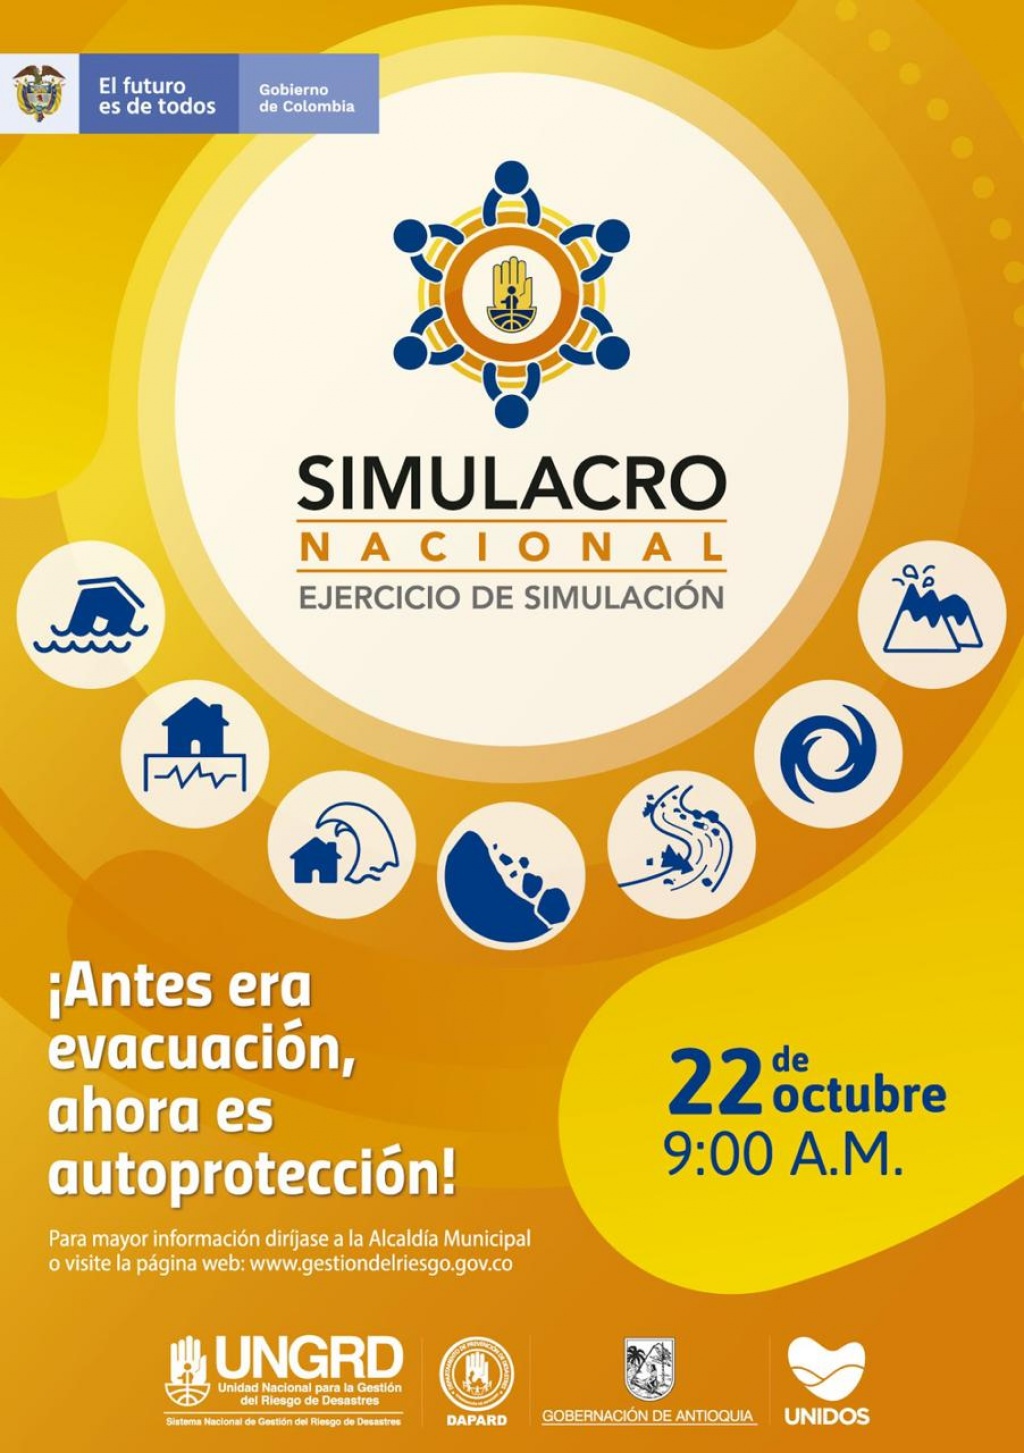 Mañana 125 municipios de Antioquia participarán del Simulacro Nacional, ejercicio de simulación 2020